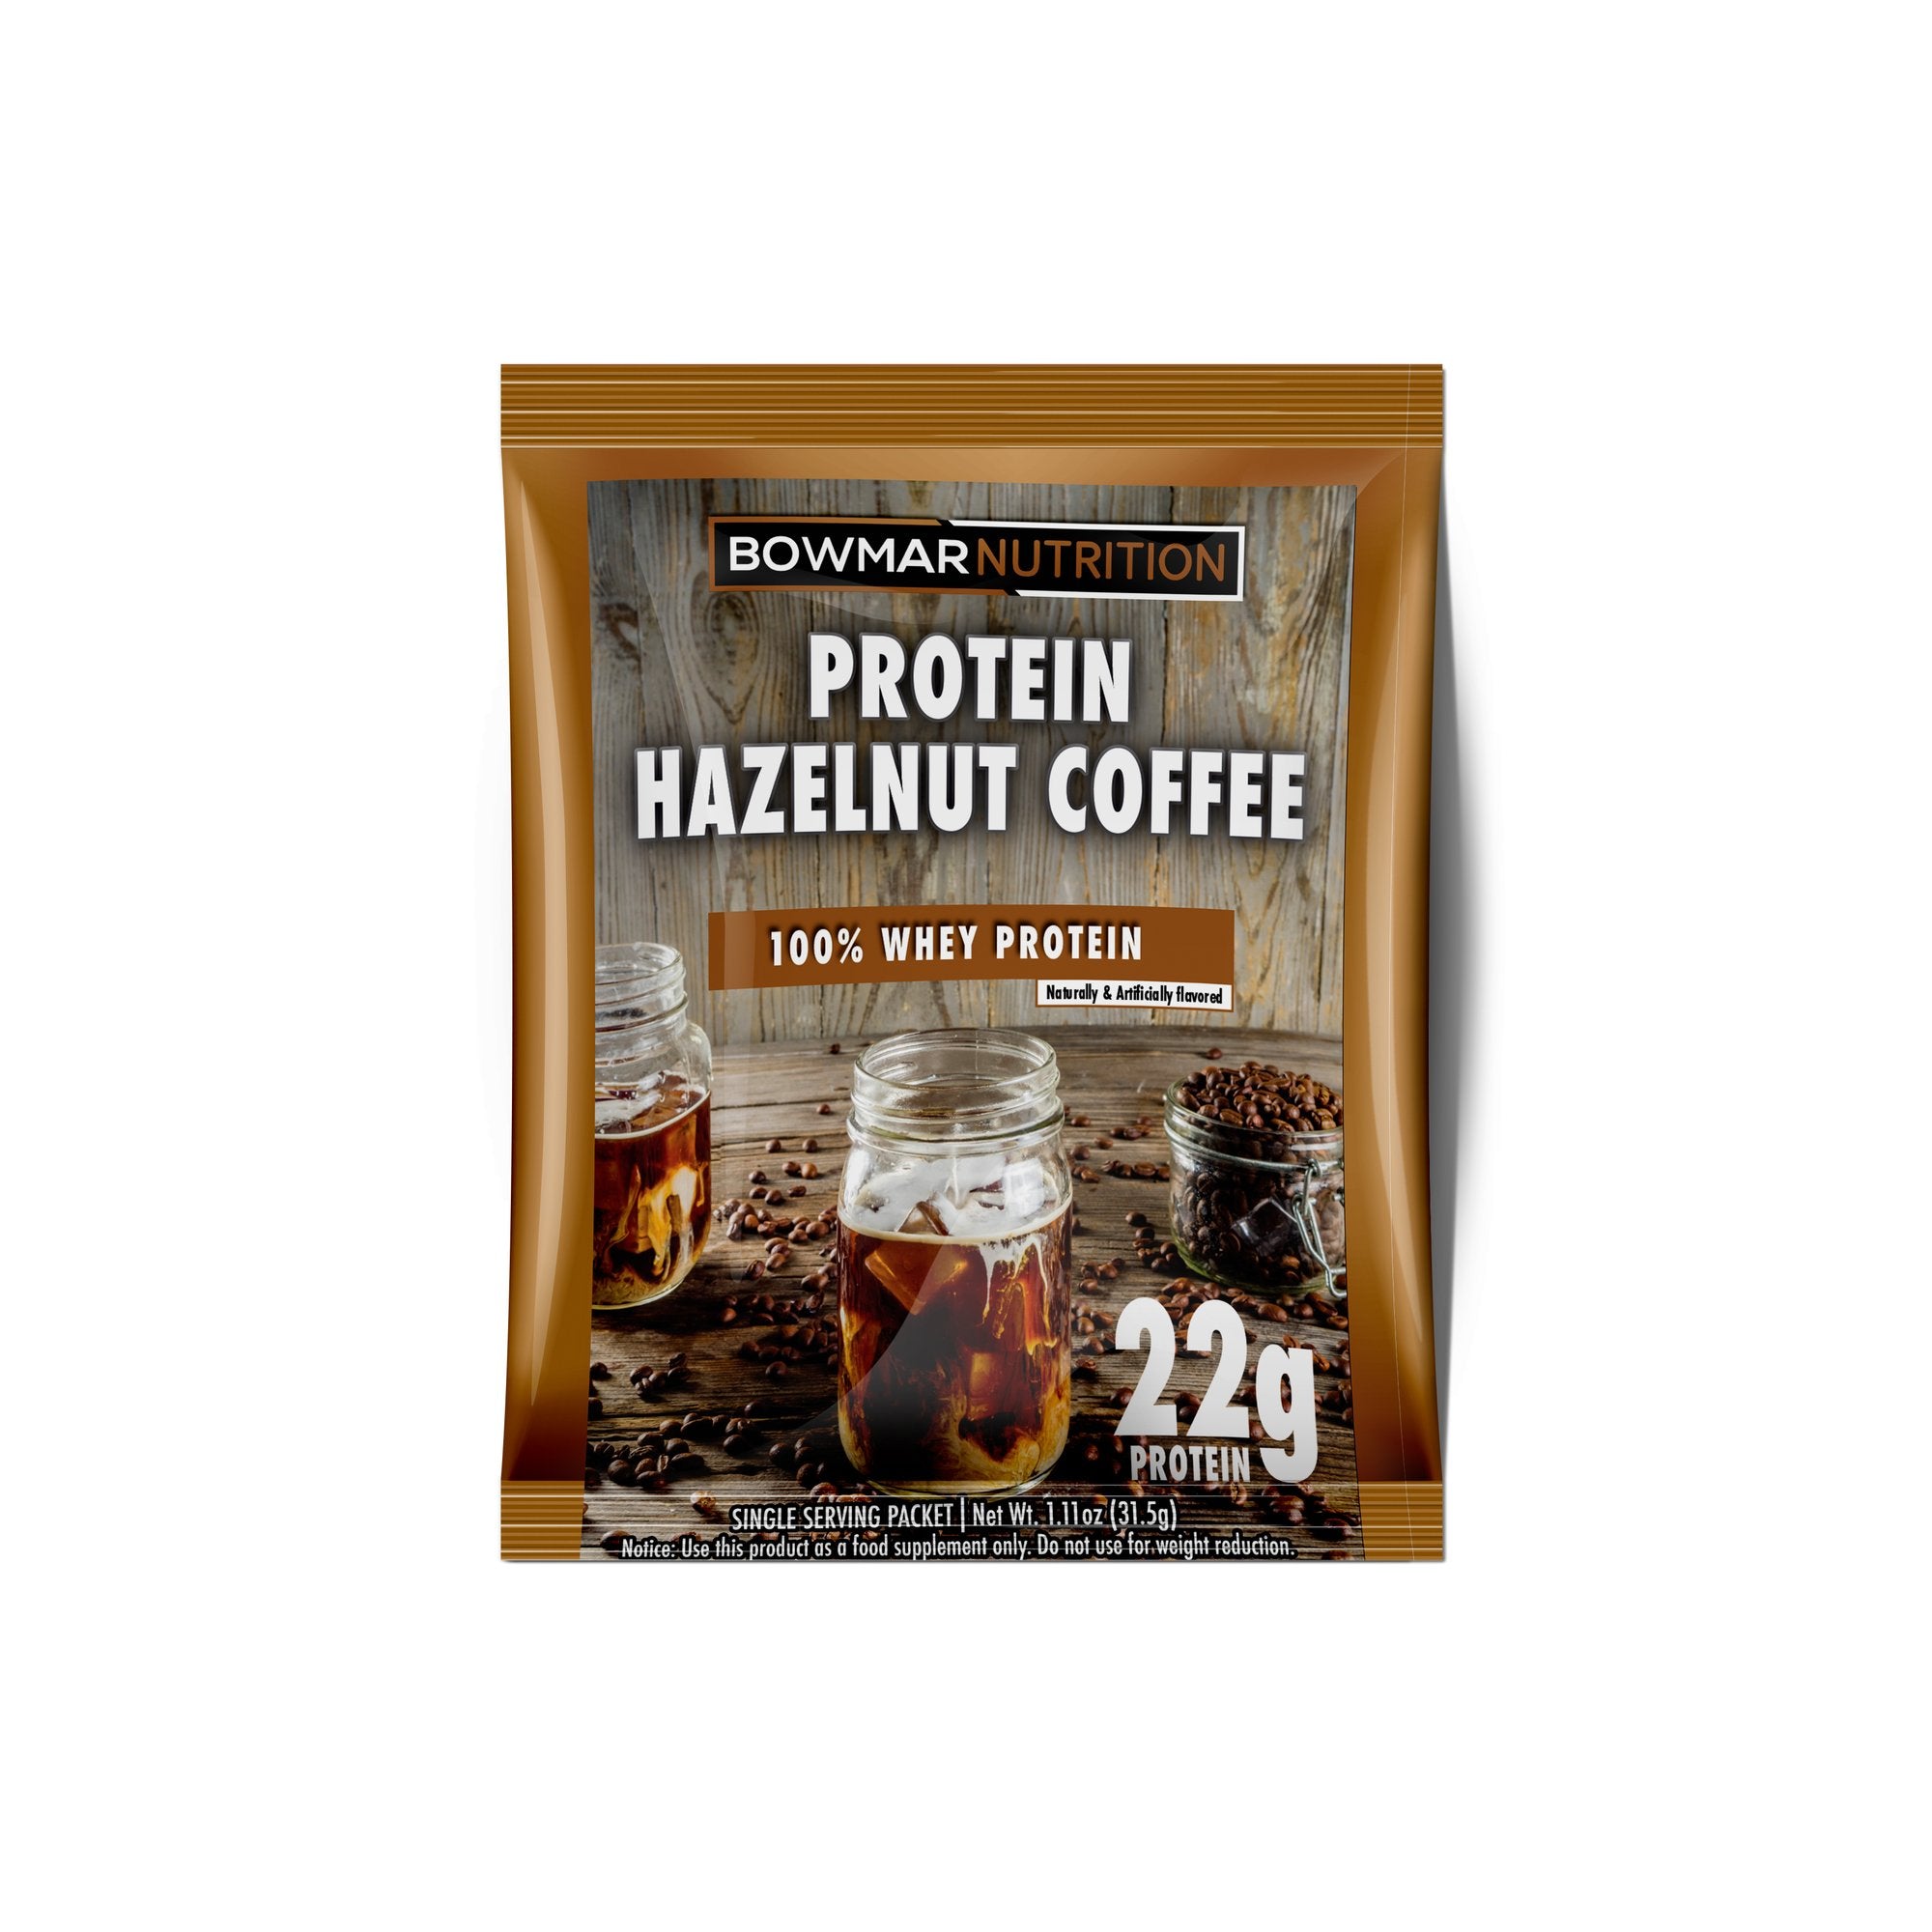 Bowmar Whey Protein Powder Sample (1 serving) bowmar-protein-powder-sachet-1-packet Protein Snacks Hazelnut Coffee bowmar